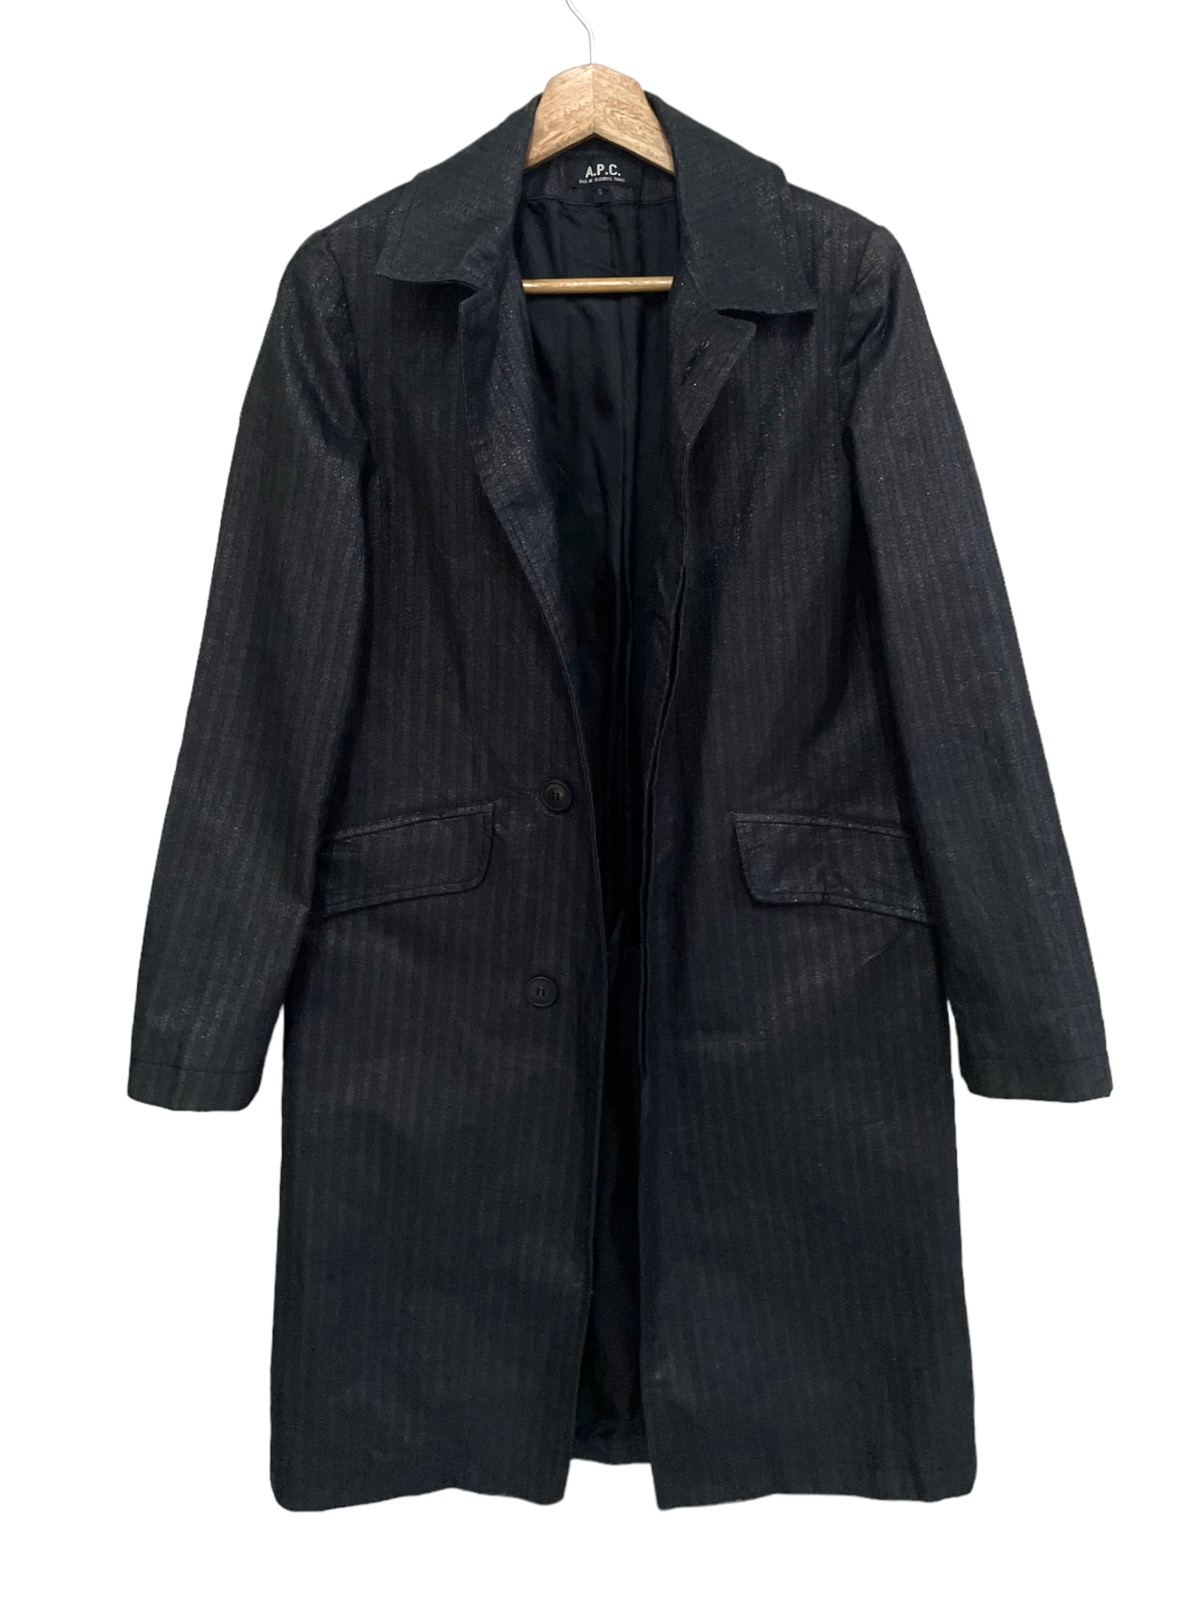 💥 Glitter Black APC Button Long Jacket - 2